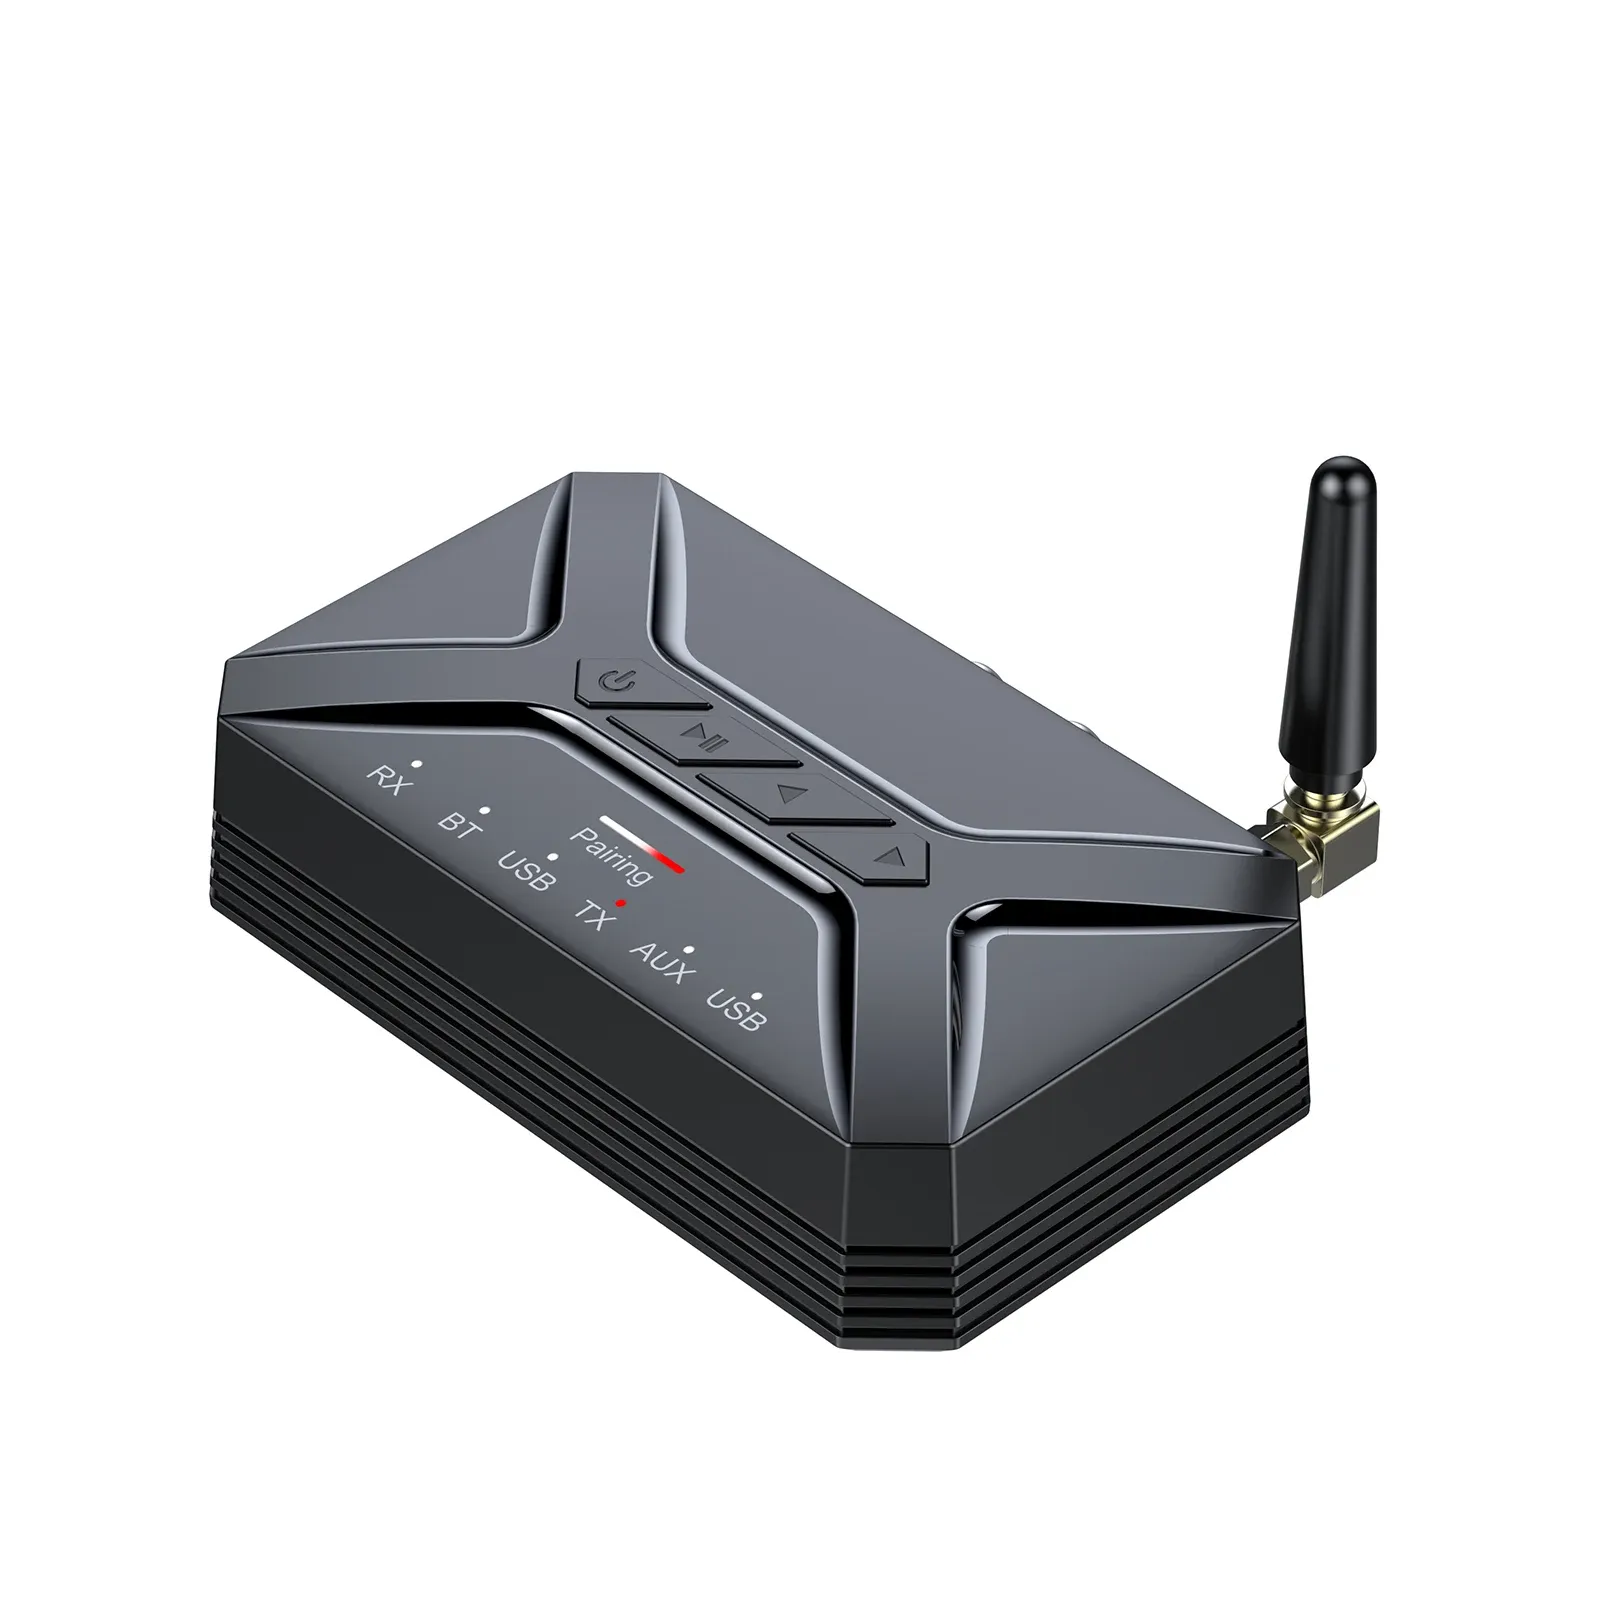 Hoparlörler Bluetooth 5.0 Ses Alıcı Verici Kablosuz 3.5mm Ses Adaptörü USB USB RCA AUX TV Araba Stereo Hoparlör Kulaklığı